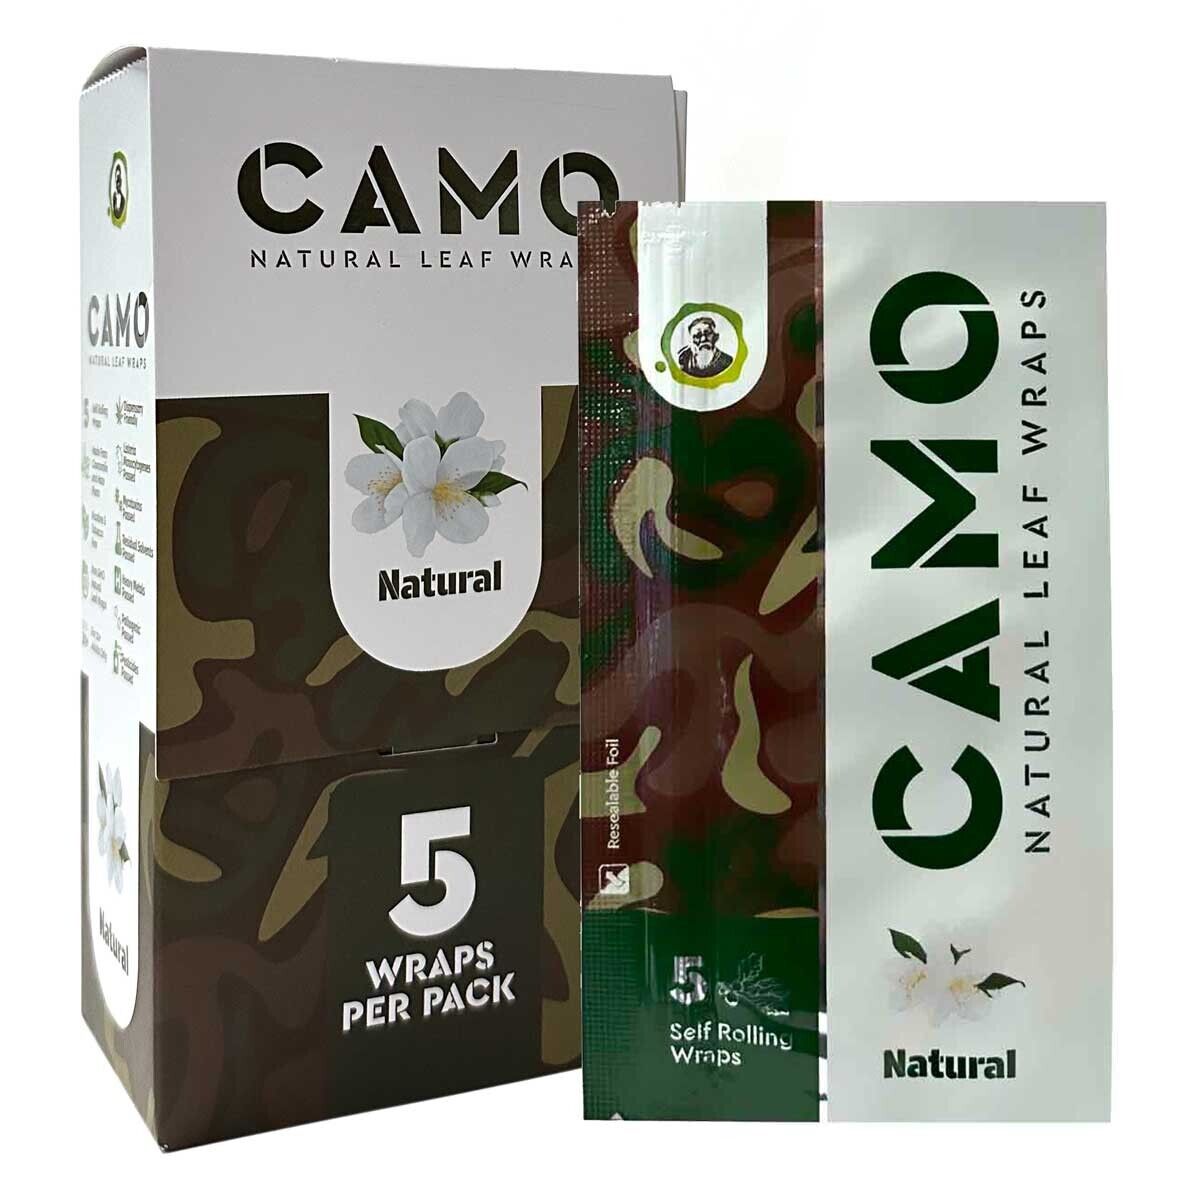 CAMO Natural Leaf Wraps Natural 25/5